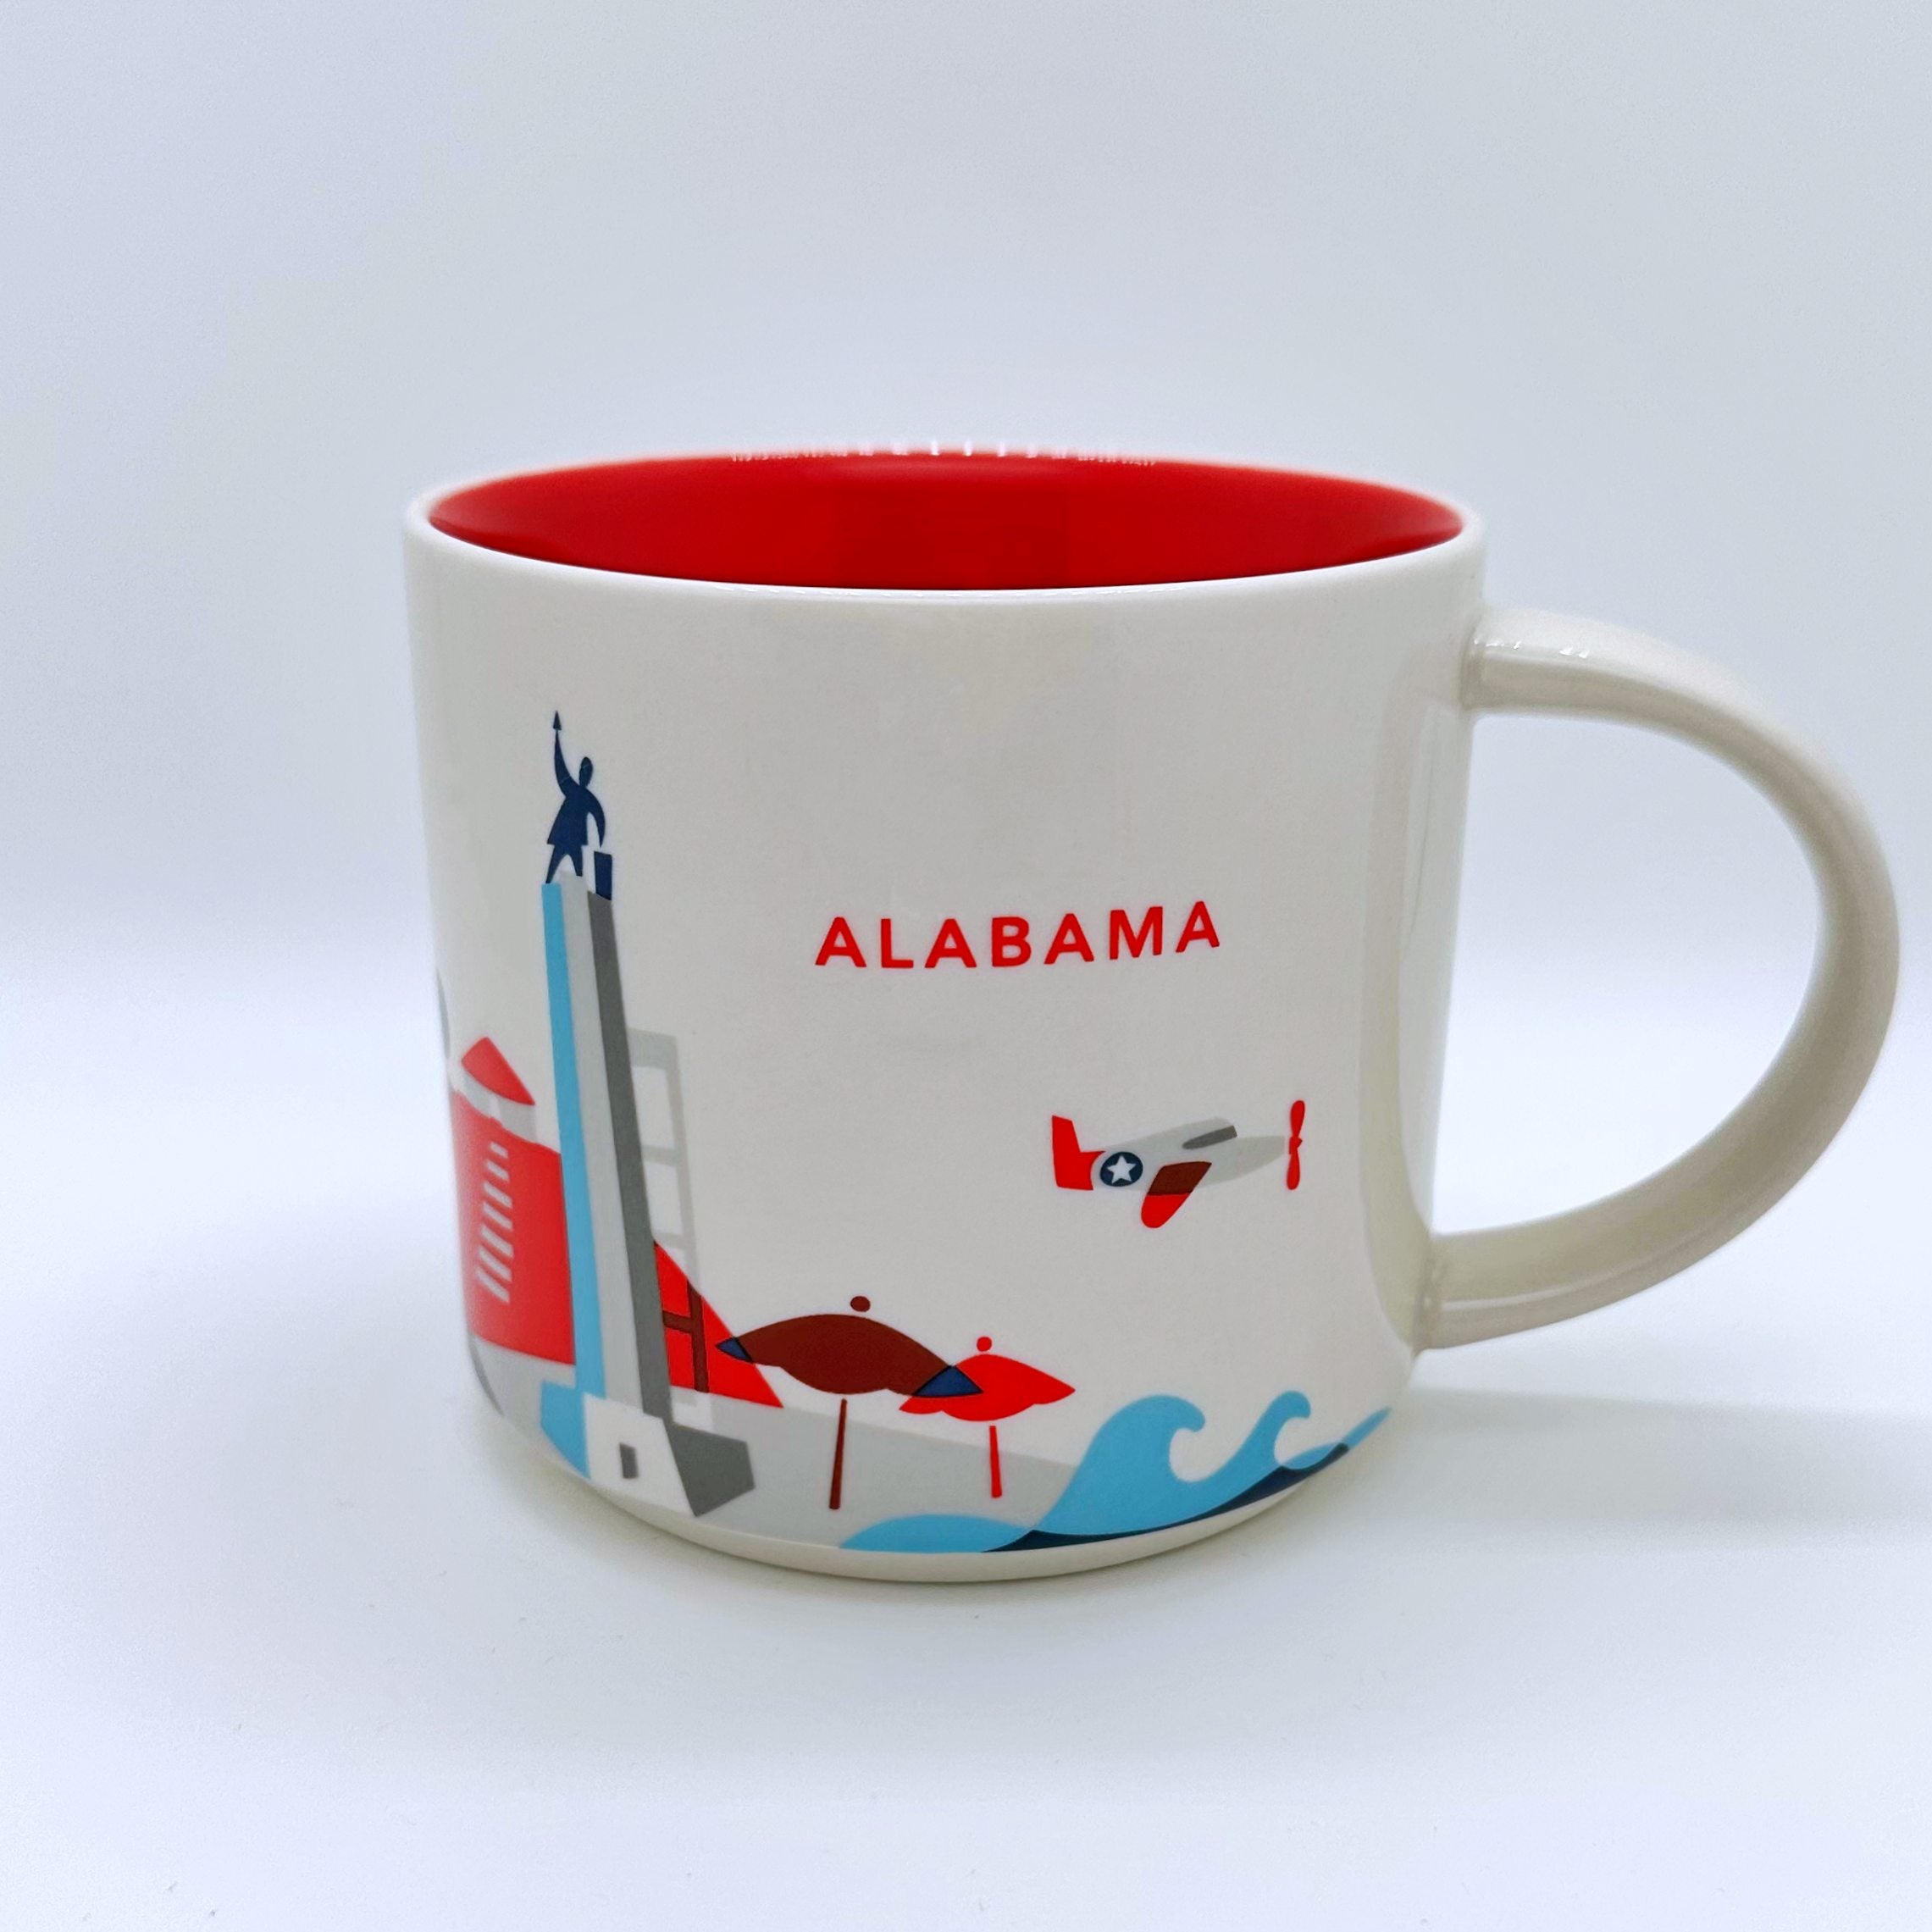 Alabama City Kaffee Tasse